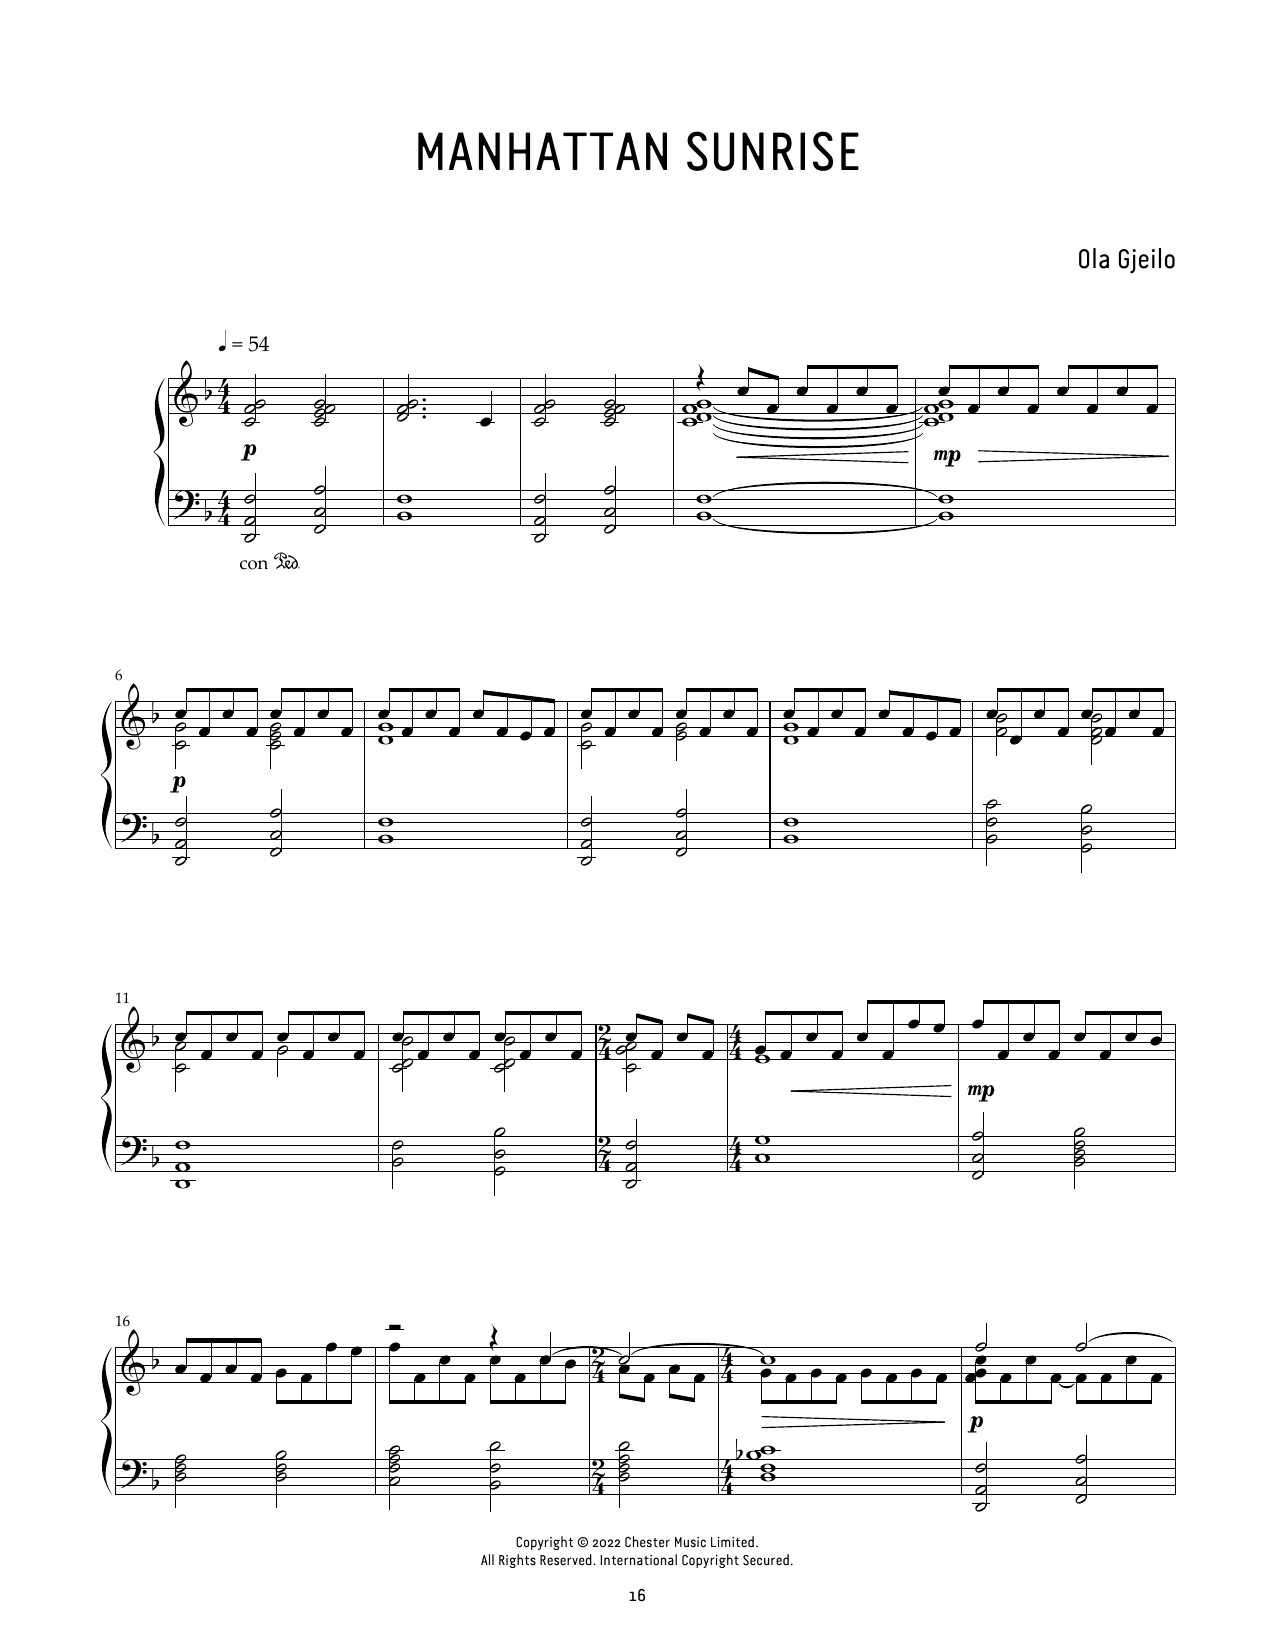 Ola Gjeilo Manhattan Sunrise Sheet Music Notes & Chords for Piano Solo - Download or Print PDF